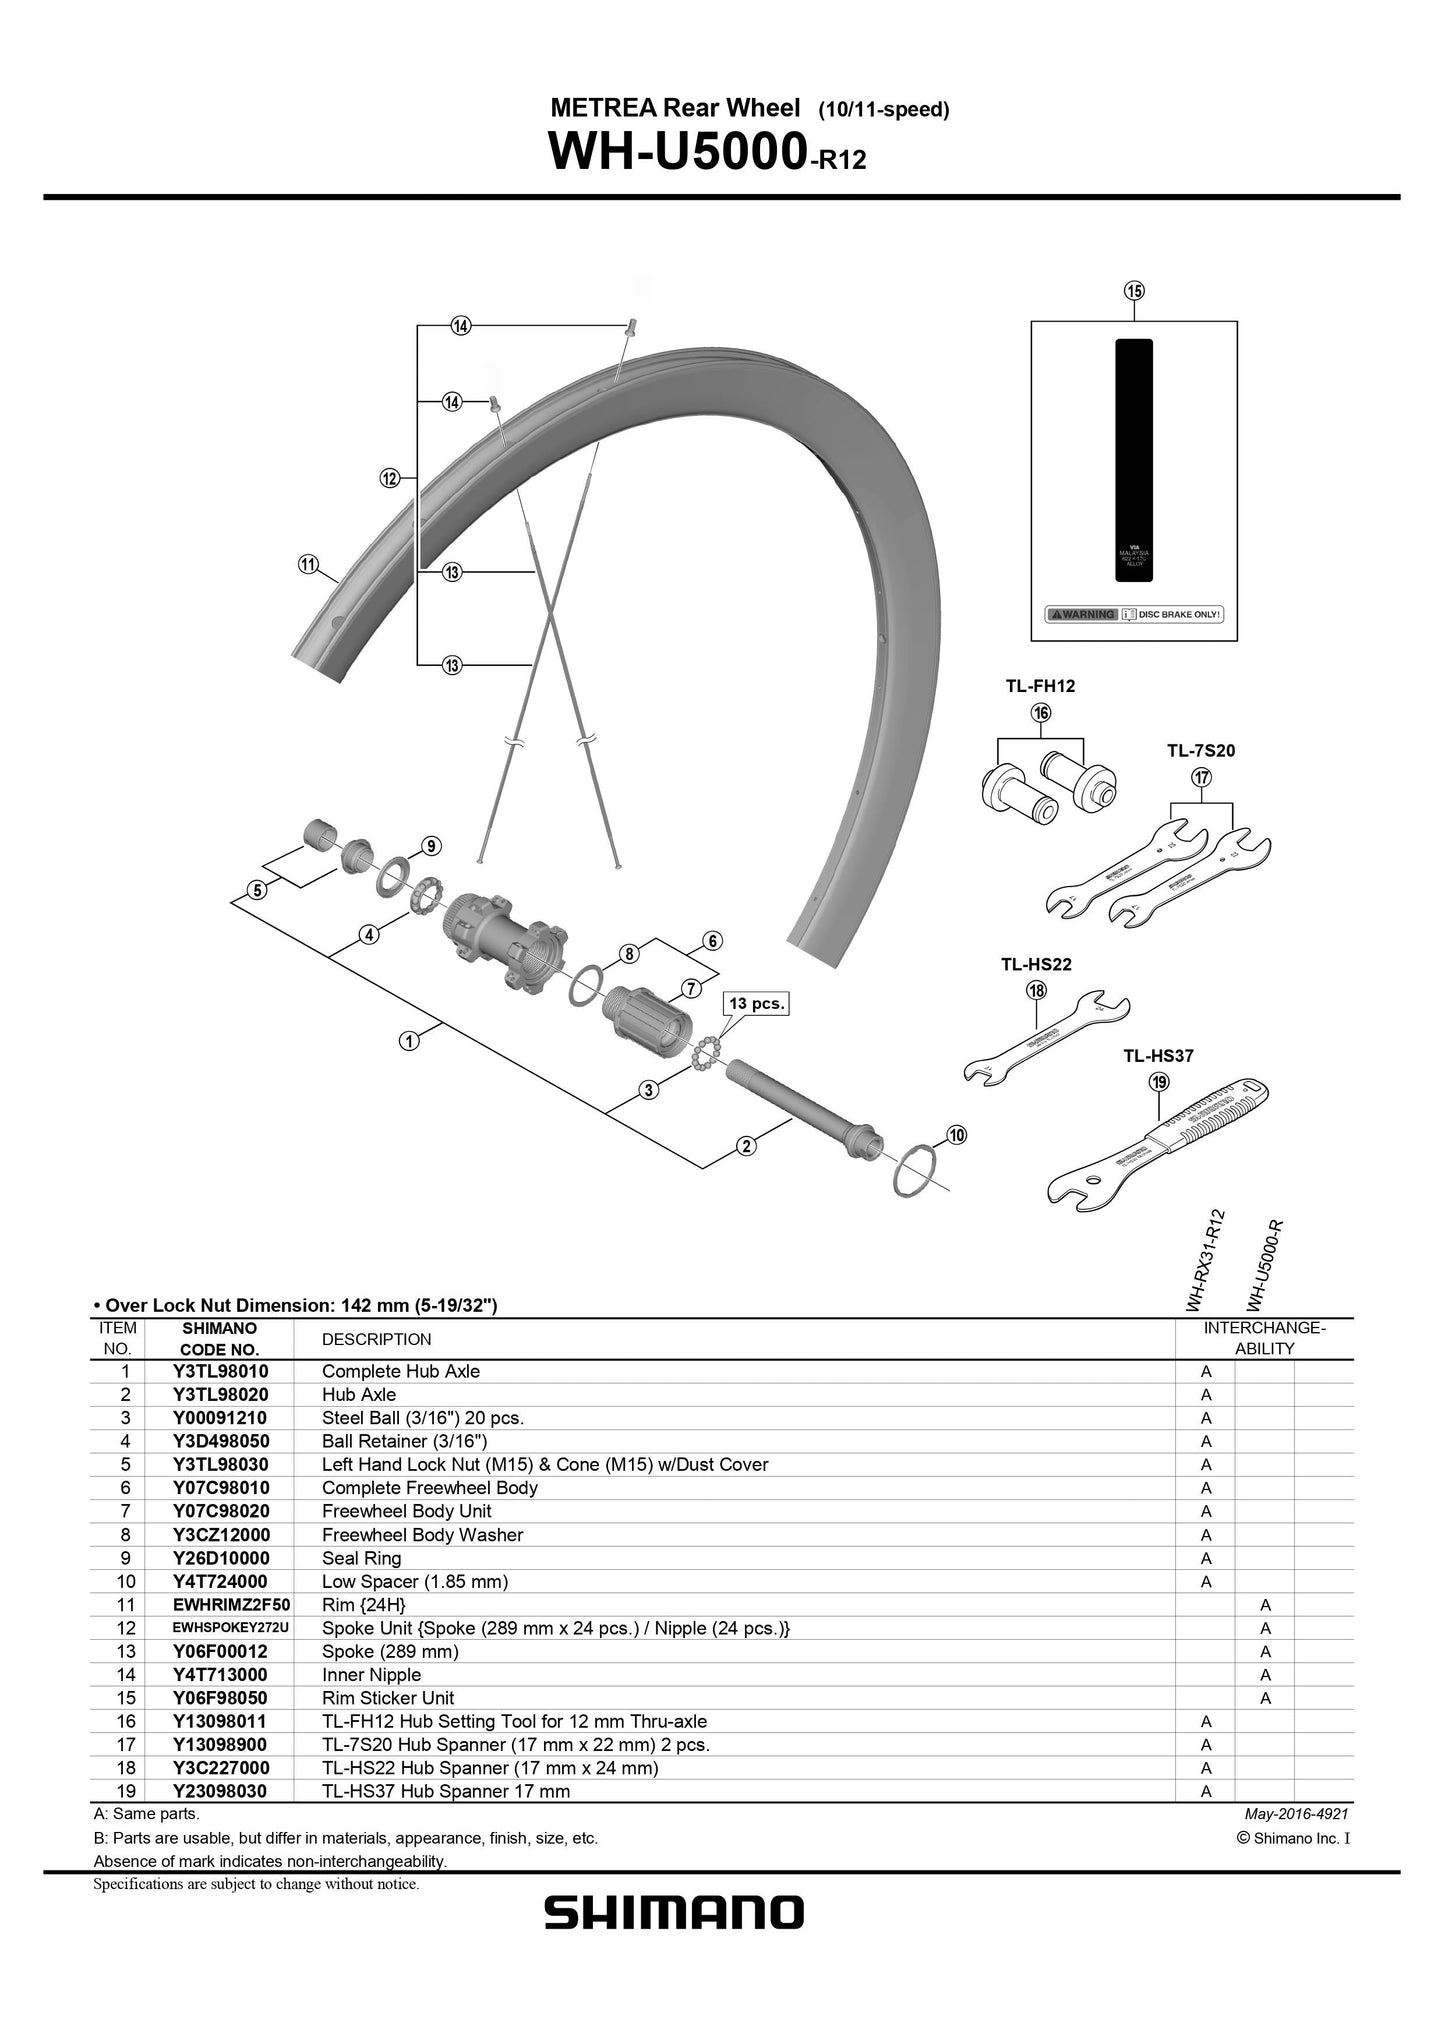 SHIMANO METREA WH-U5000-CL F/F12/R/R12 Spoke kit 289mm x 24 pcs. Nipple 24 pcs. - EWHSPOKEY272U-Pit Crew Cycles